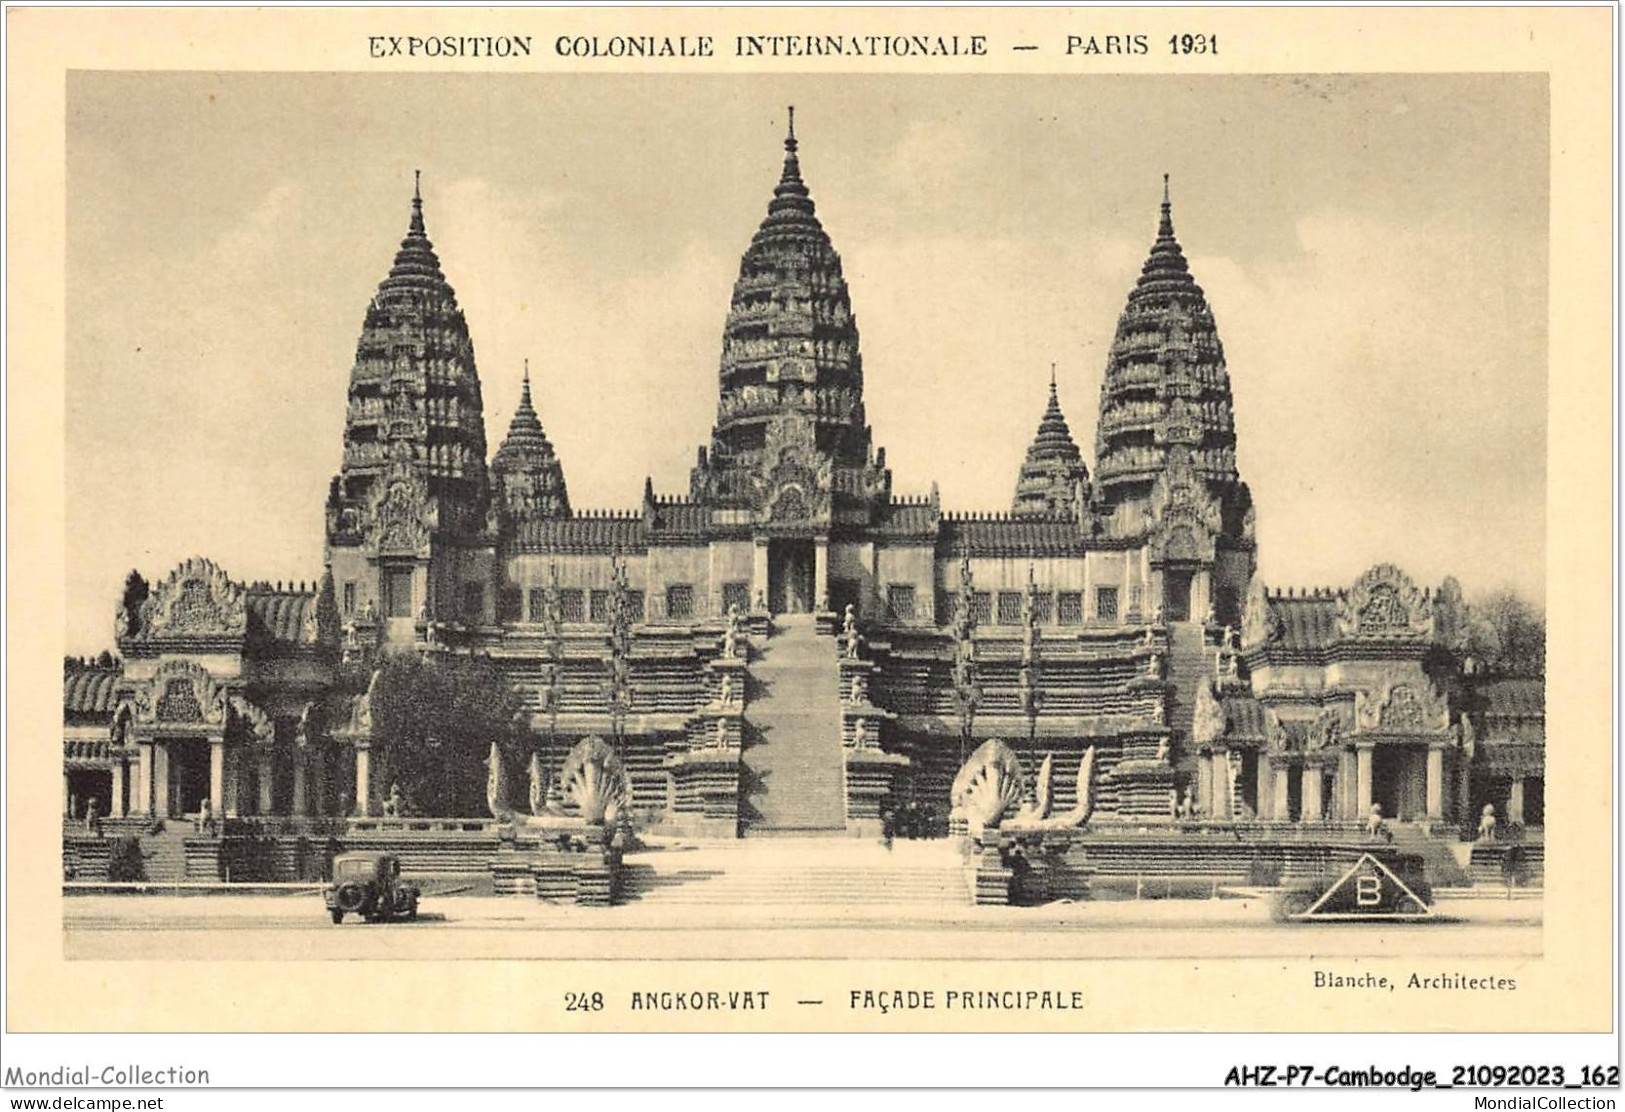 AHZP7-CAMBODGE-0677 - EXPOSITION COLONIALE INTERNATIONALE - PARIS 1931 - ANGKOR-VAT - FACADE PRINCIPALE - Cambodge